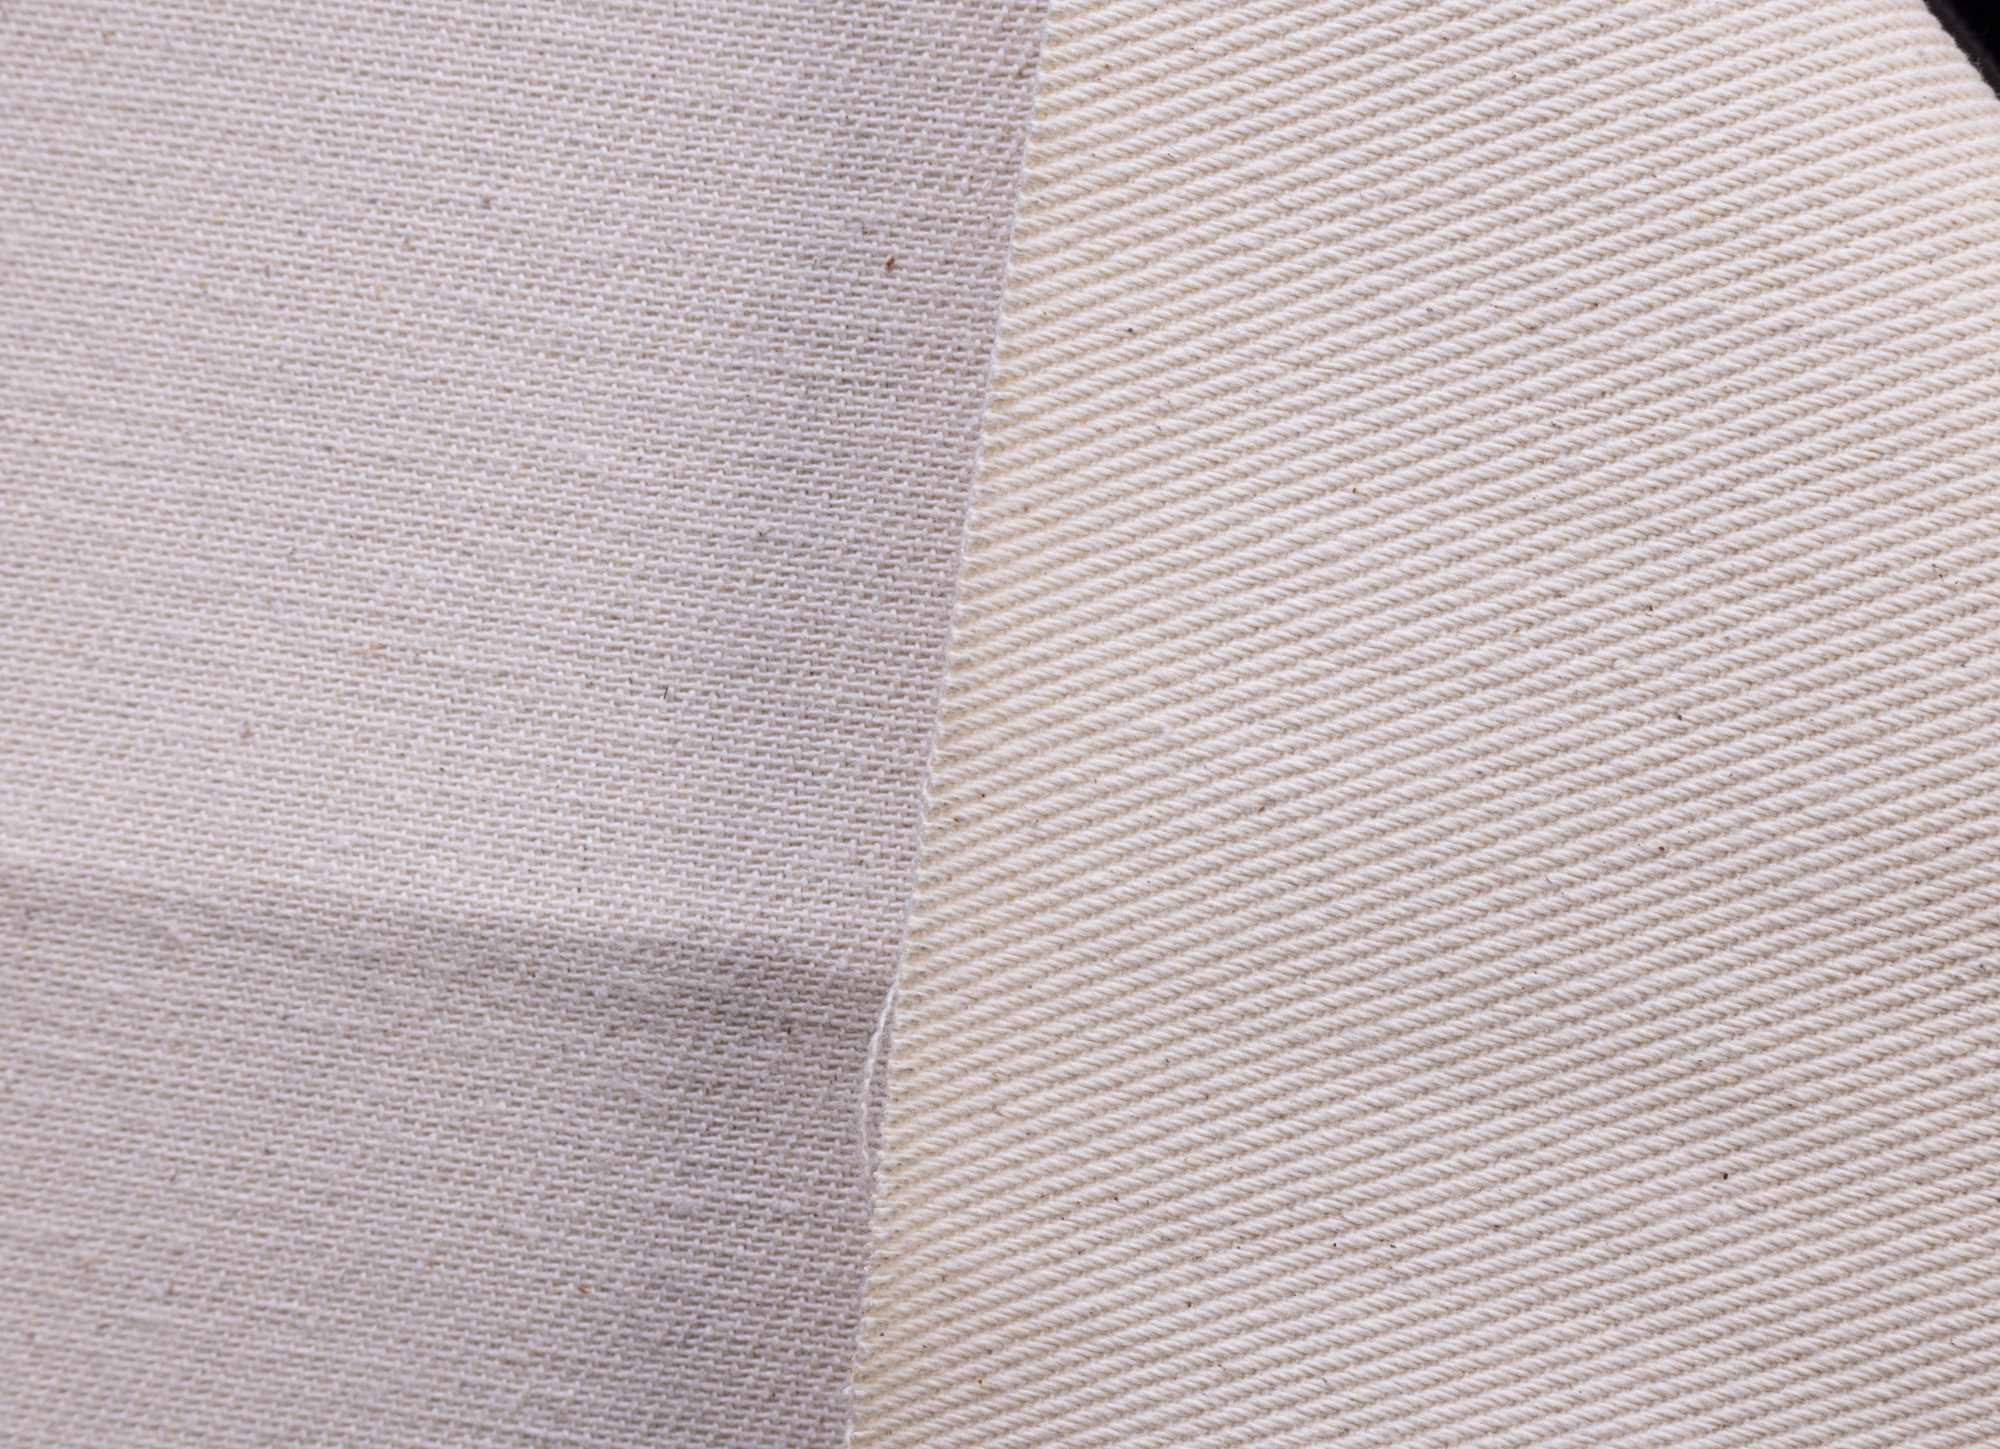 PANART Unprimed cotton with twill weave 380g/m²,  3.20 m width